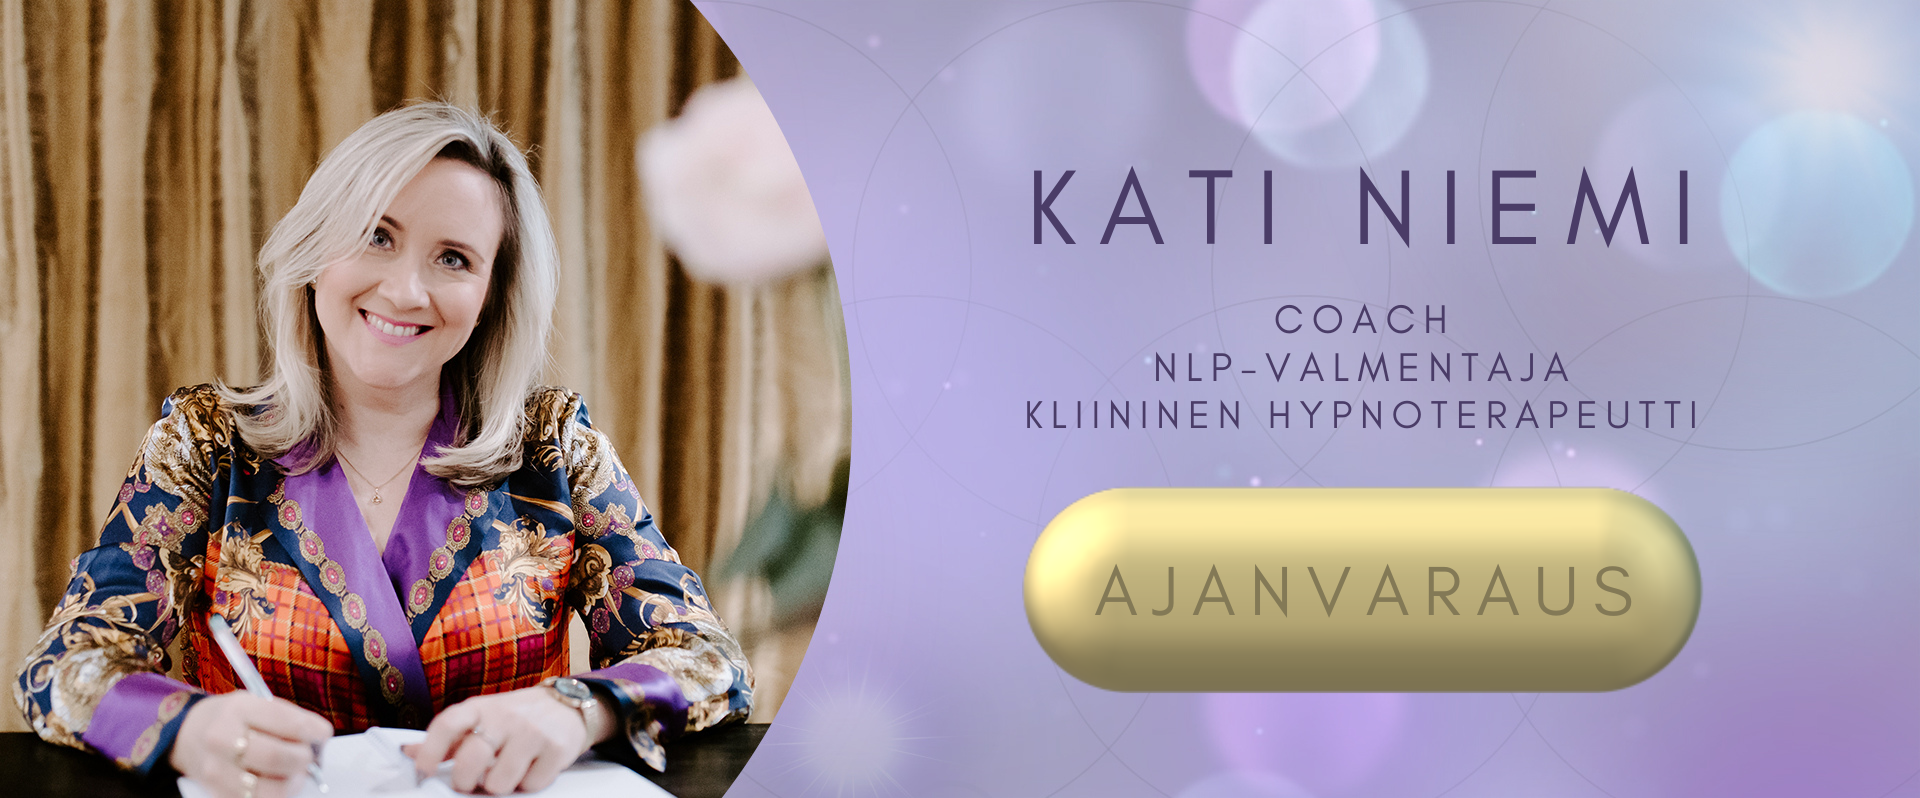 Coach Kati Niemi - Kliininen hypnoterapeutti, NLP-valmentaja (Ajanvaraus)